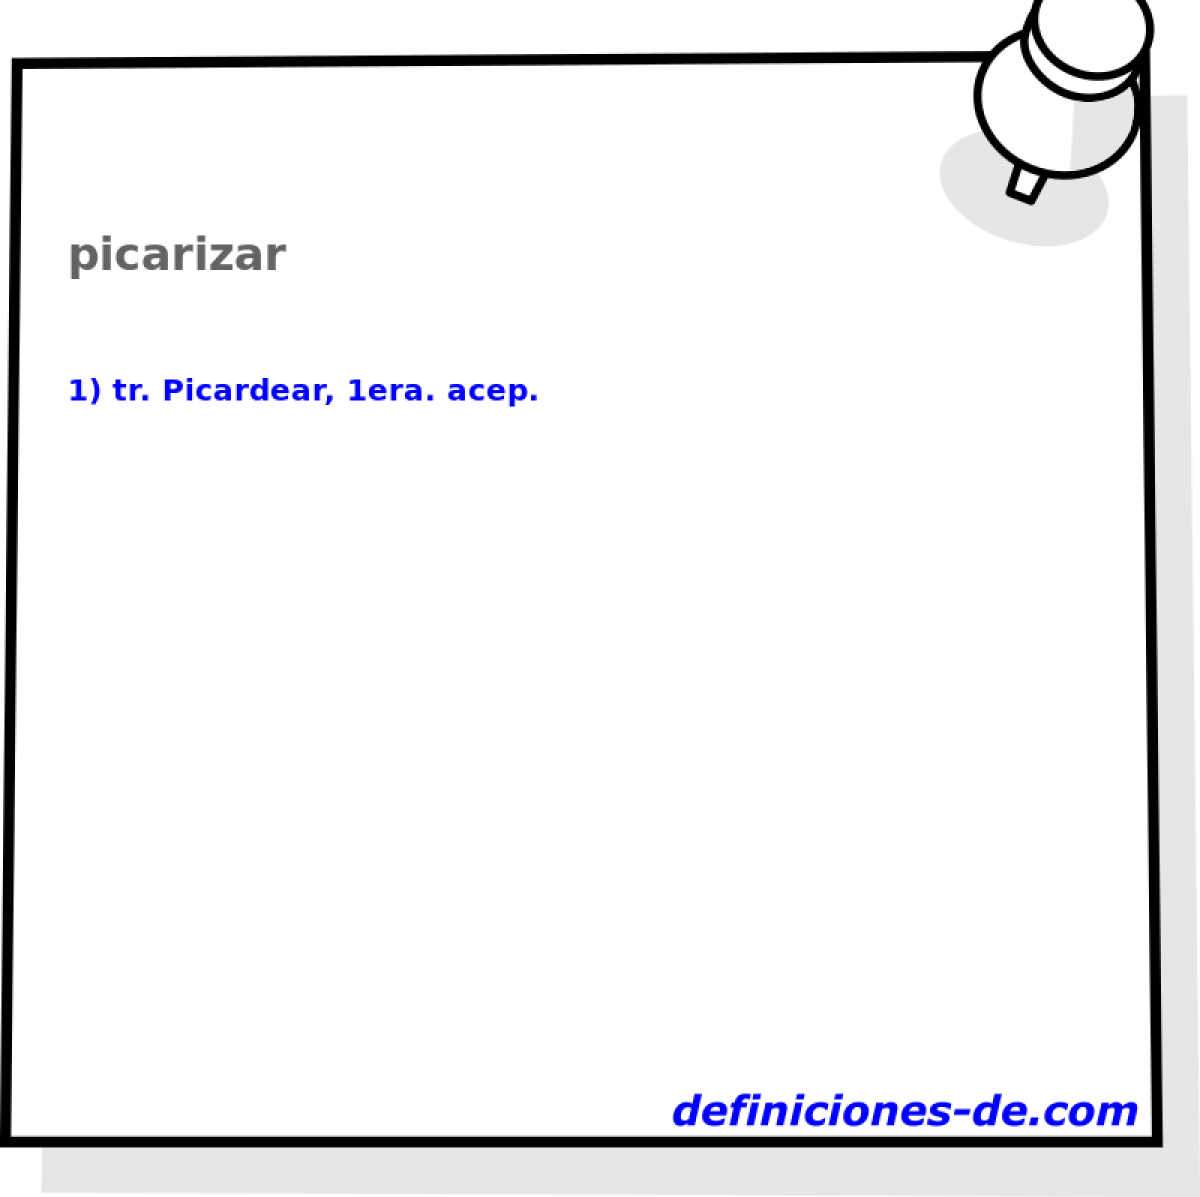 picarizar 